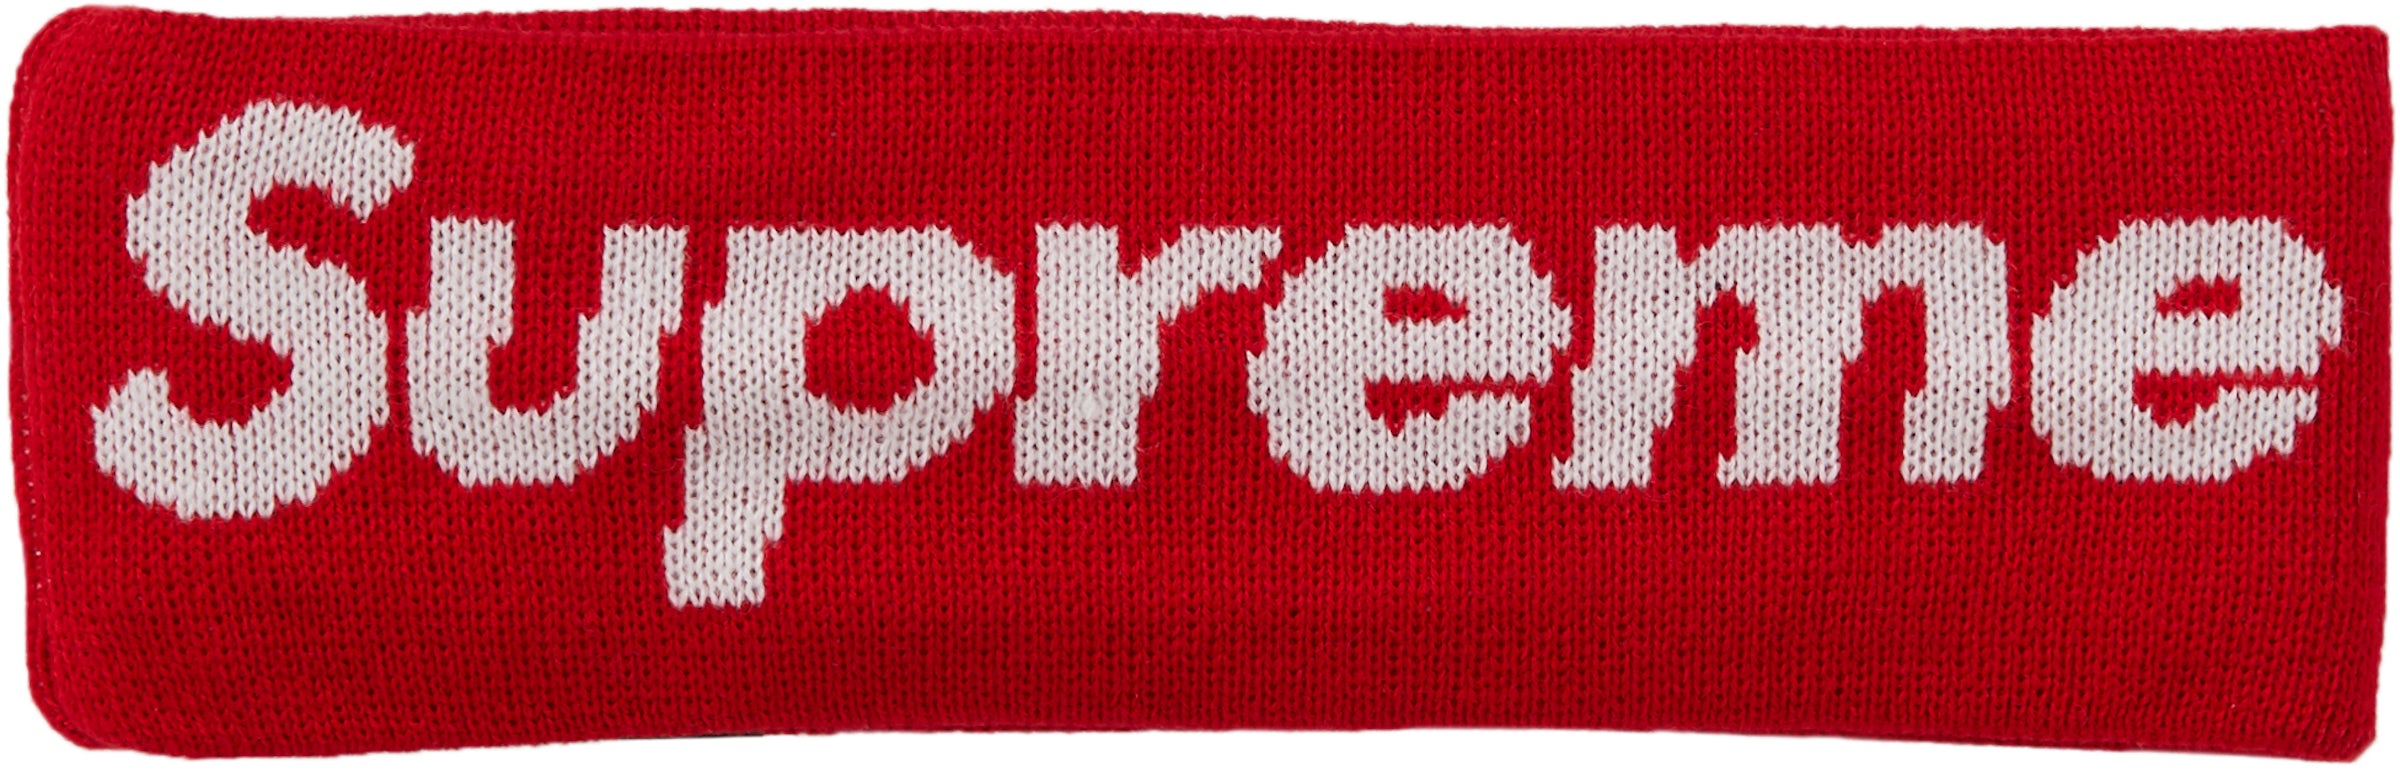 Supreme New Era Reflective Logo Headband (FW 17) Red Camo - FW17 - US